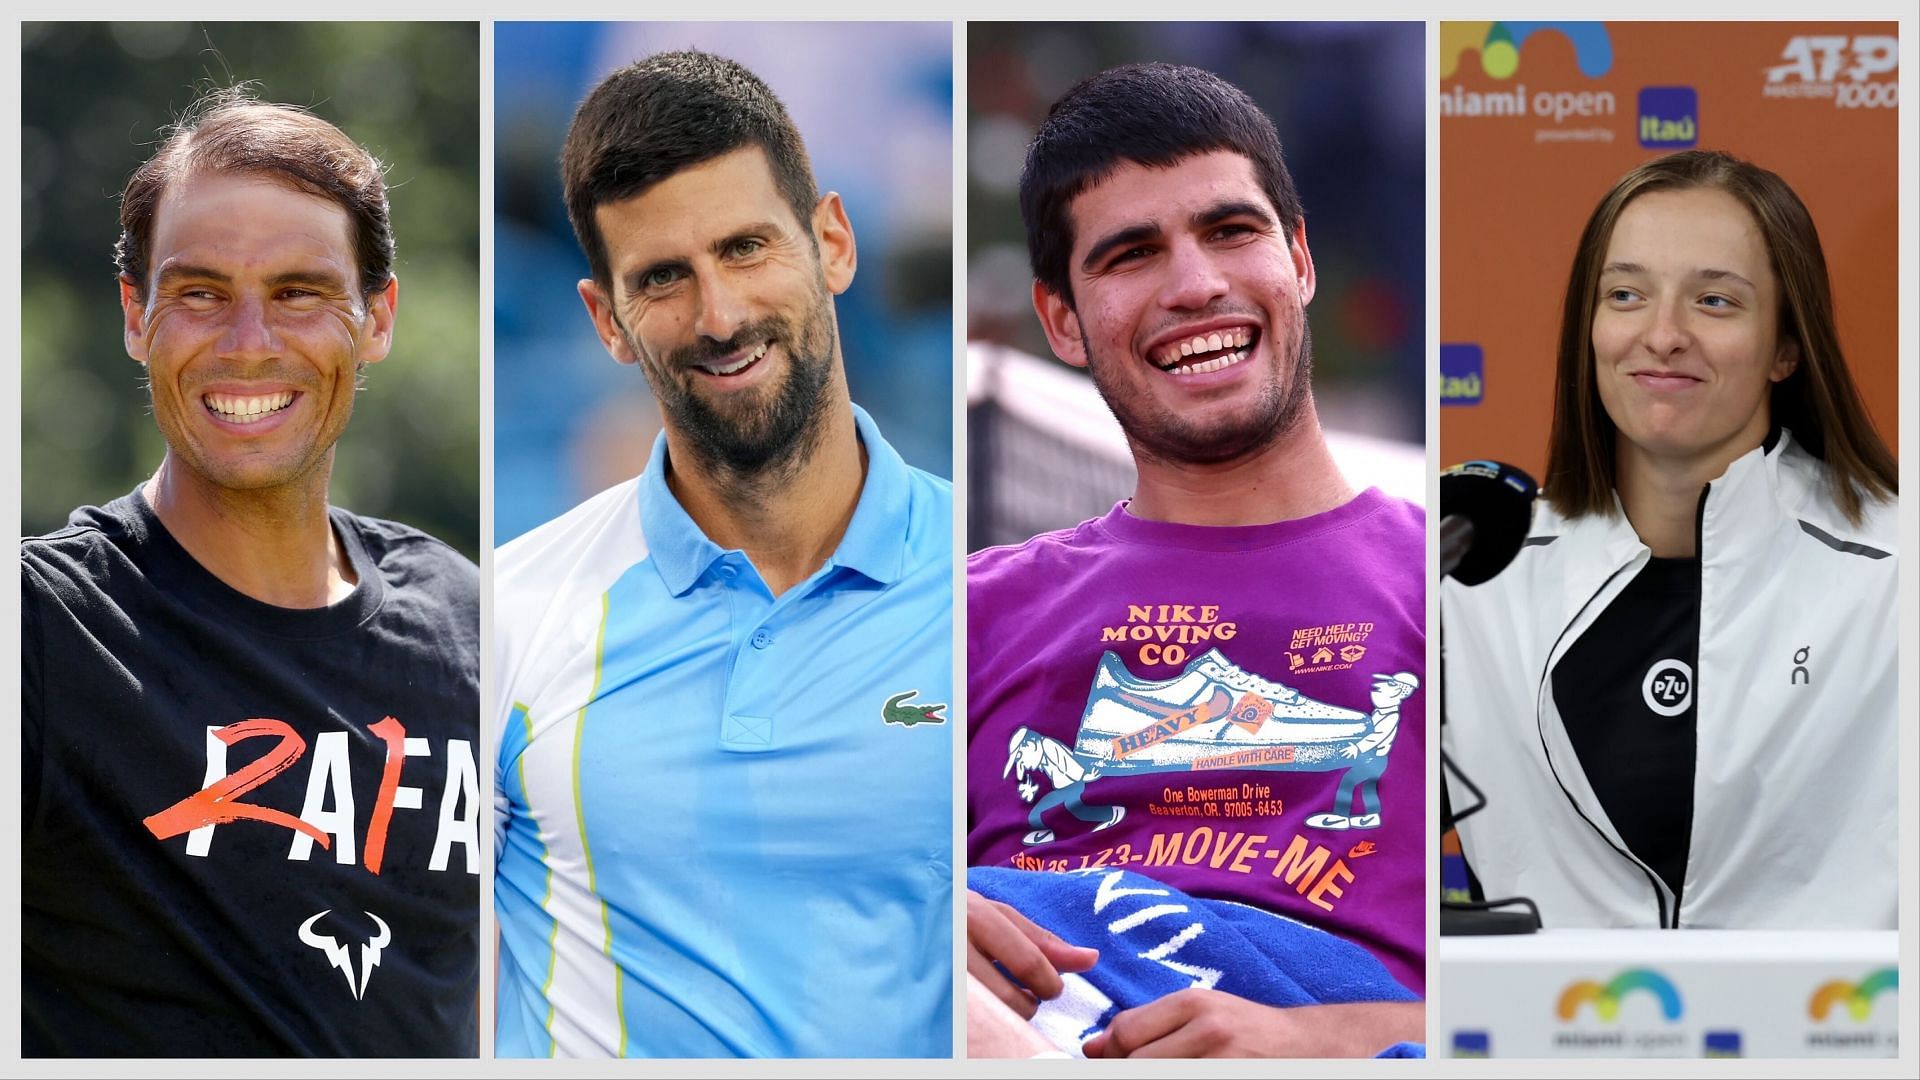 In Pictures: Rafael Nadal, Novak Djokovic, Carlos Alcaraz, Iga Swiatek, Jessica Pegula, other players' hilarious official Olympics profiles go viral